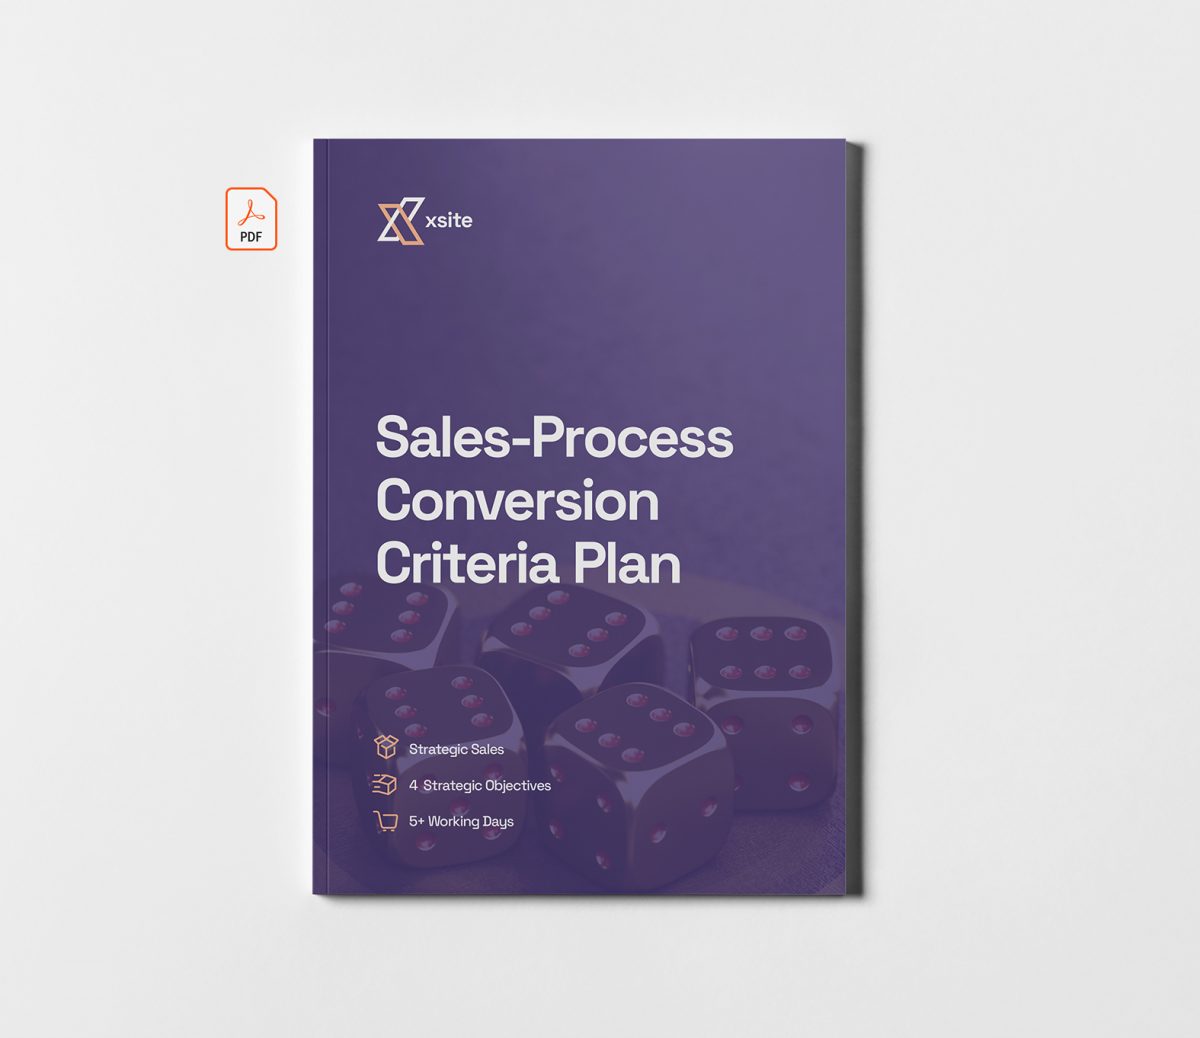 Sales-Process Conversion Criteria Plan